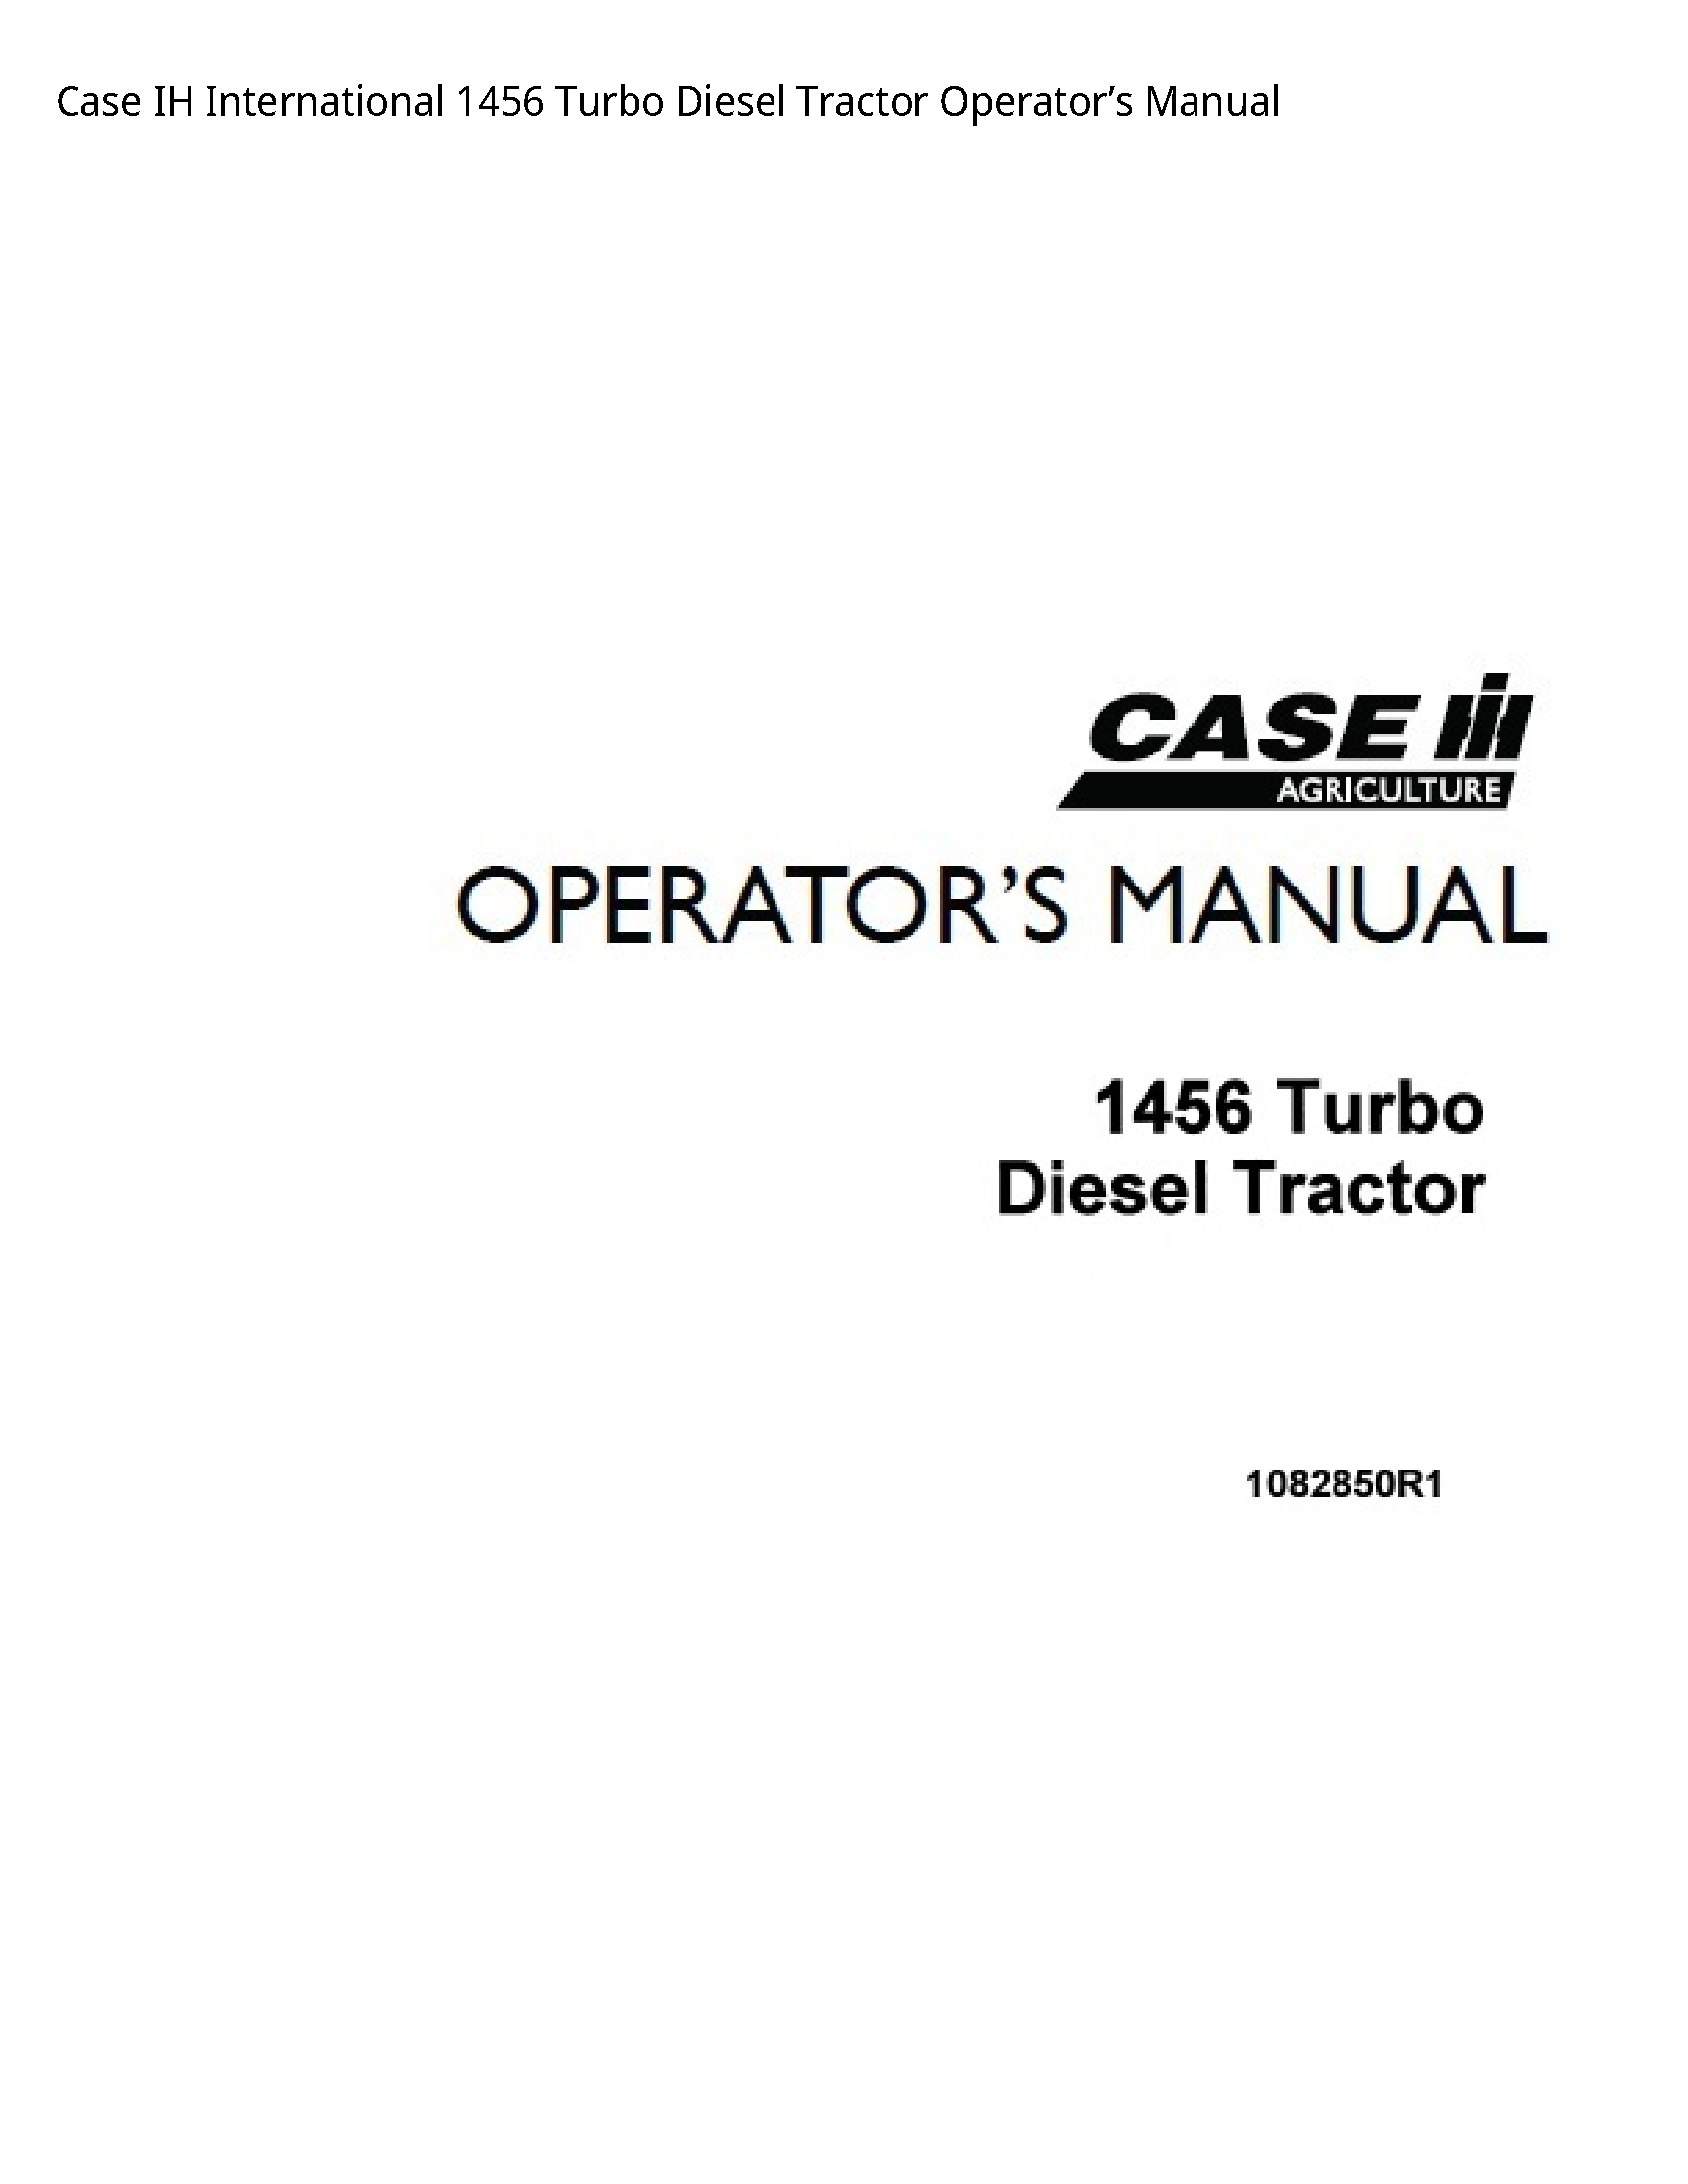 Case/Case IH 1456 IH International Turbo Diesel Tractor Operator’s manual